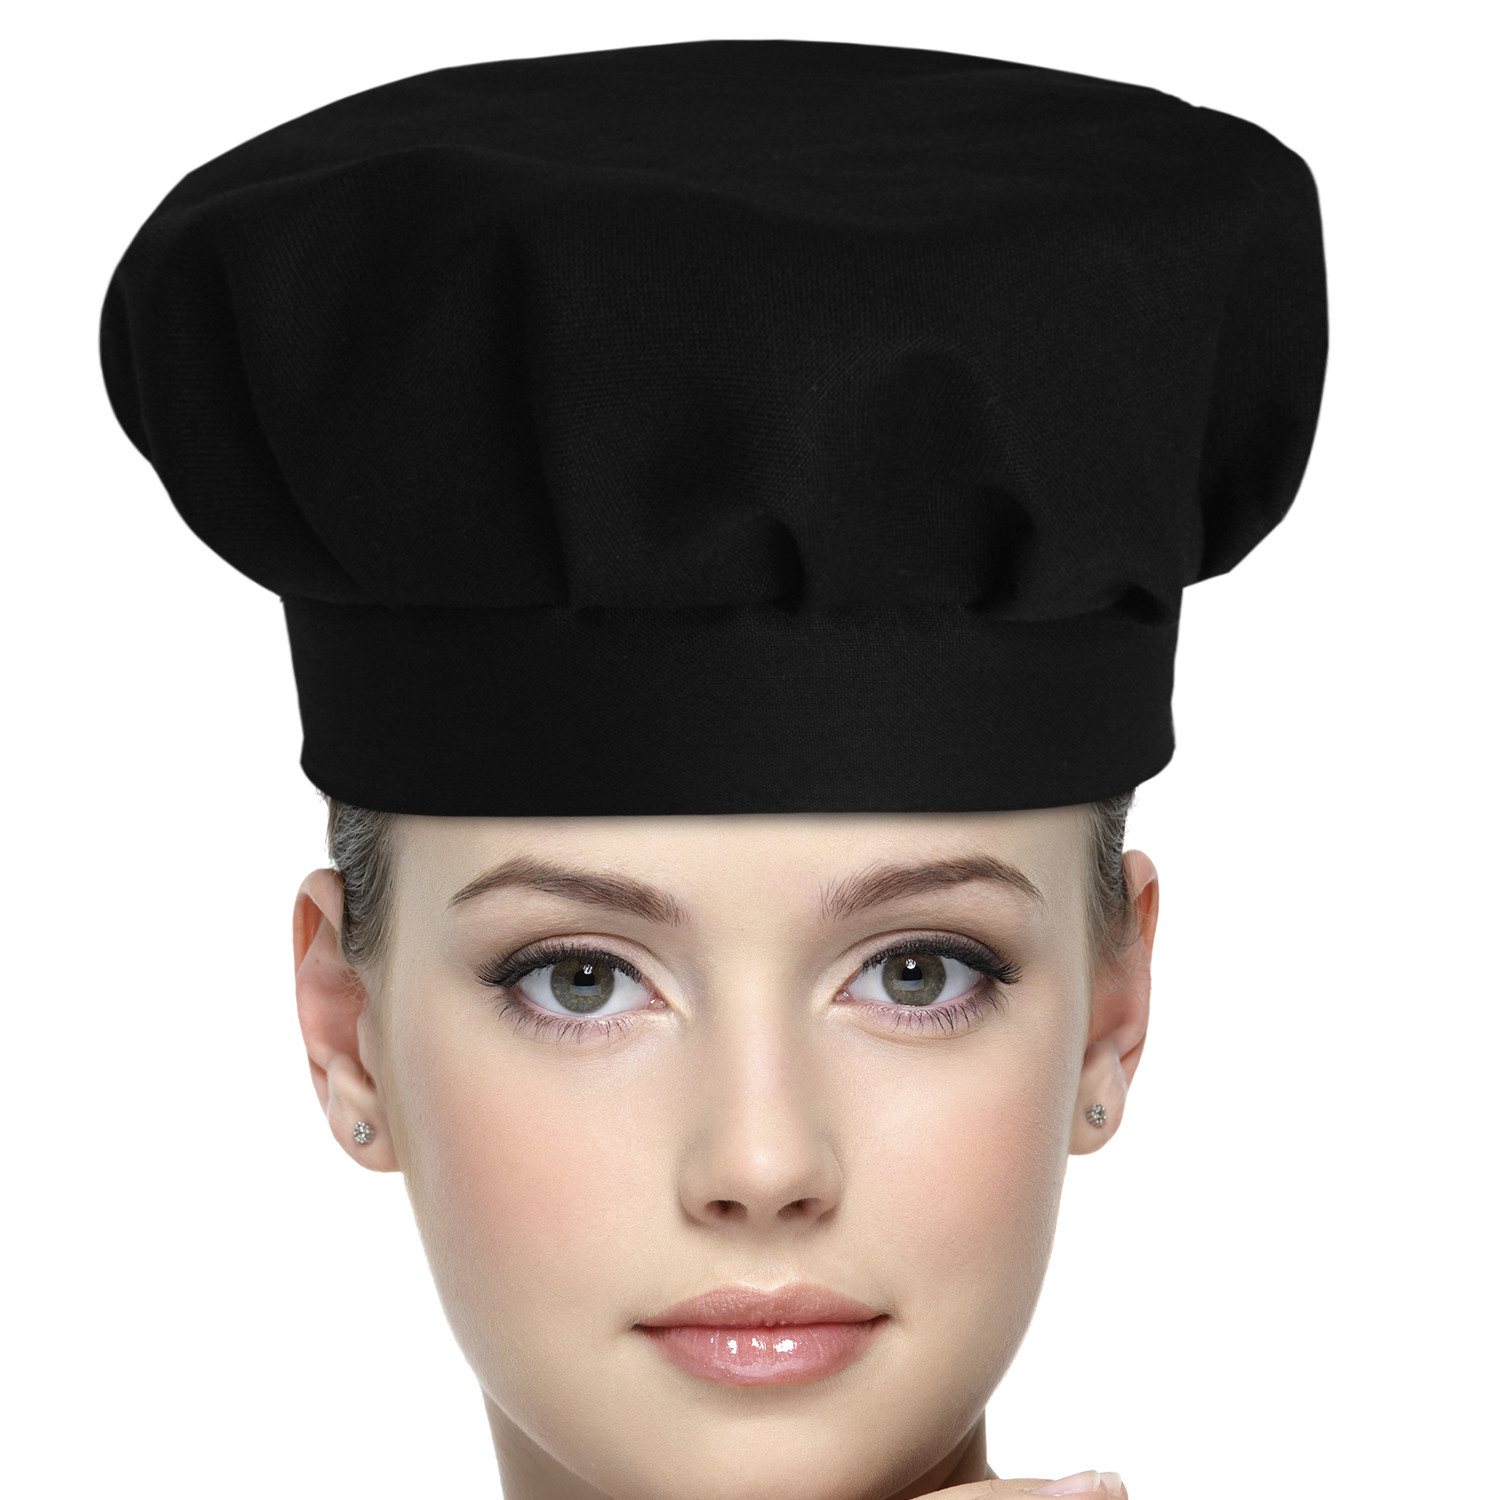 Kuber Industries Cotton Cooking Chef Cap (Black)